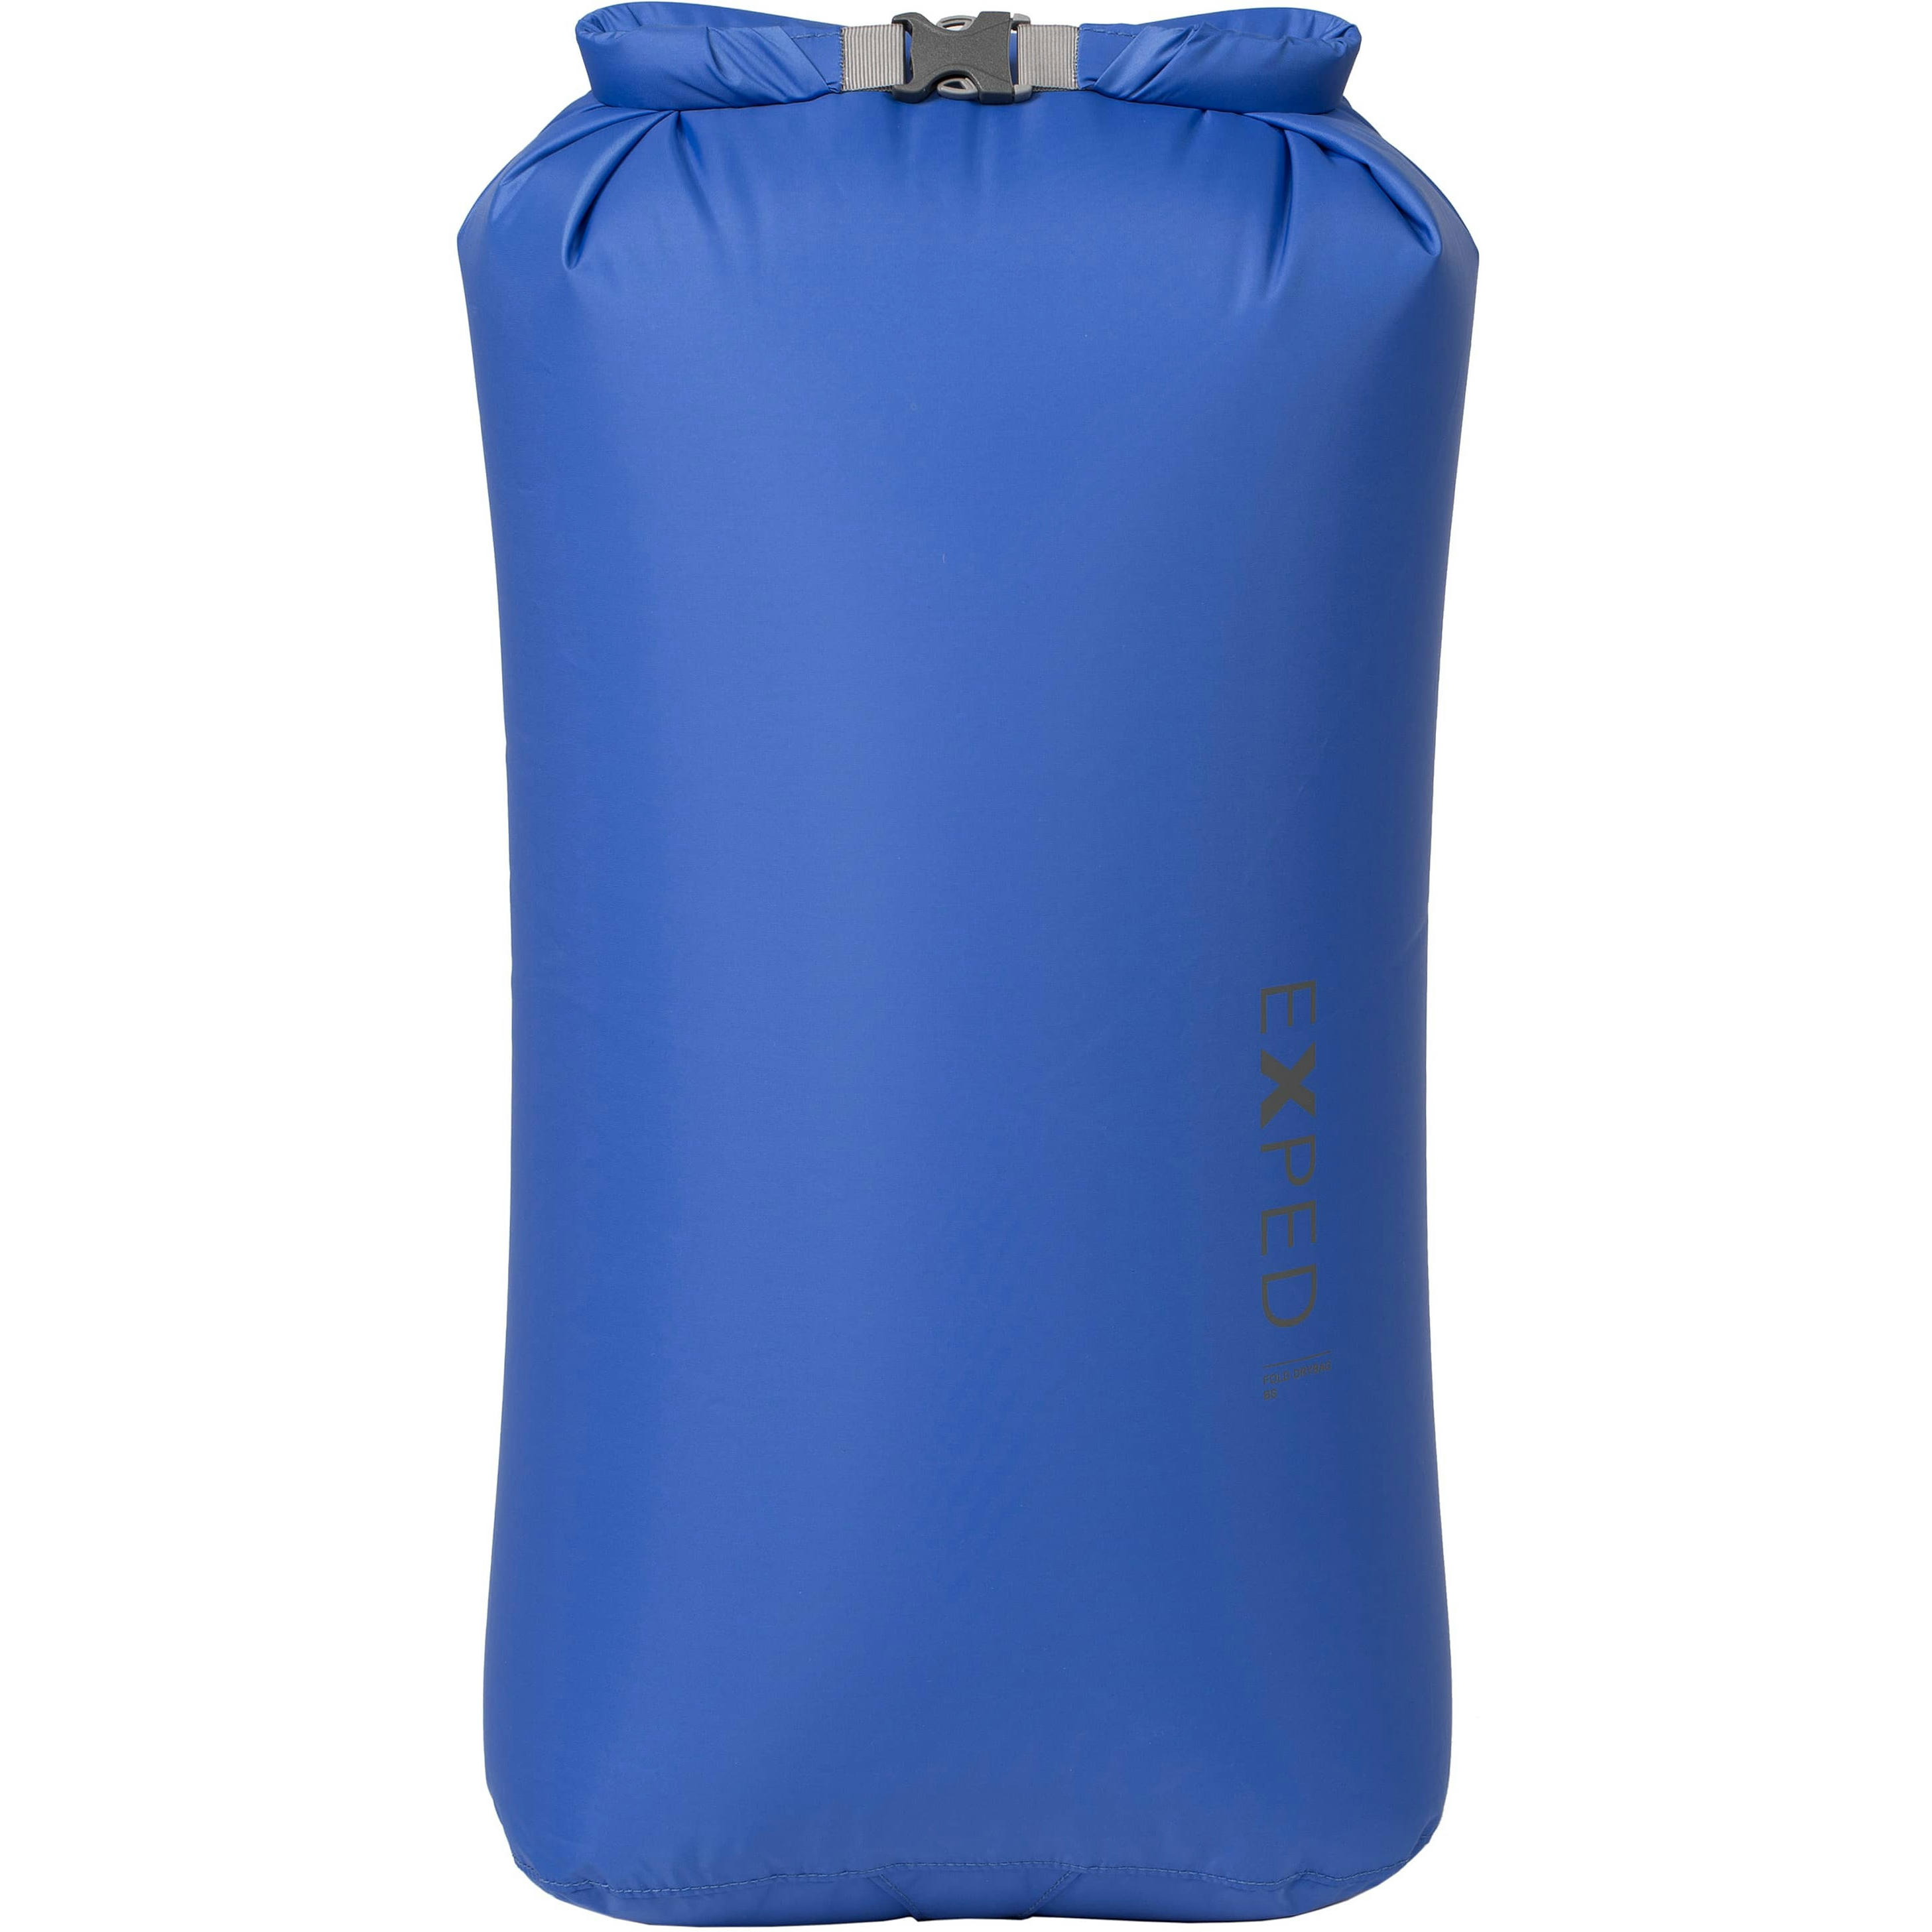 Гермомешок Exped Fold Drybag BS L blue синий фото 1